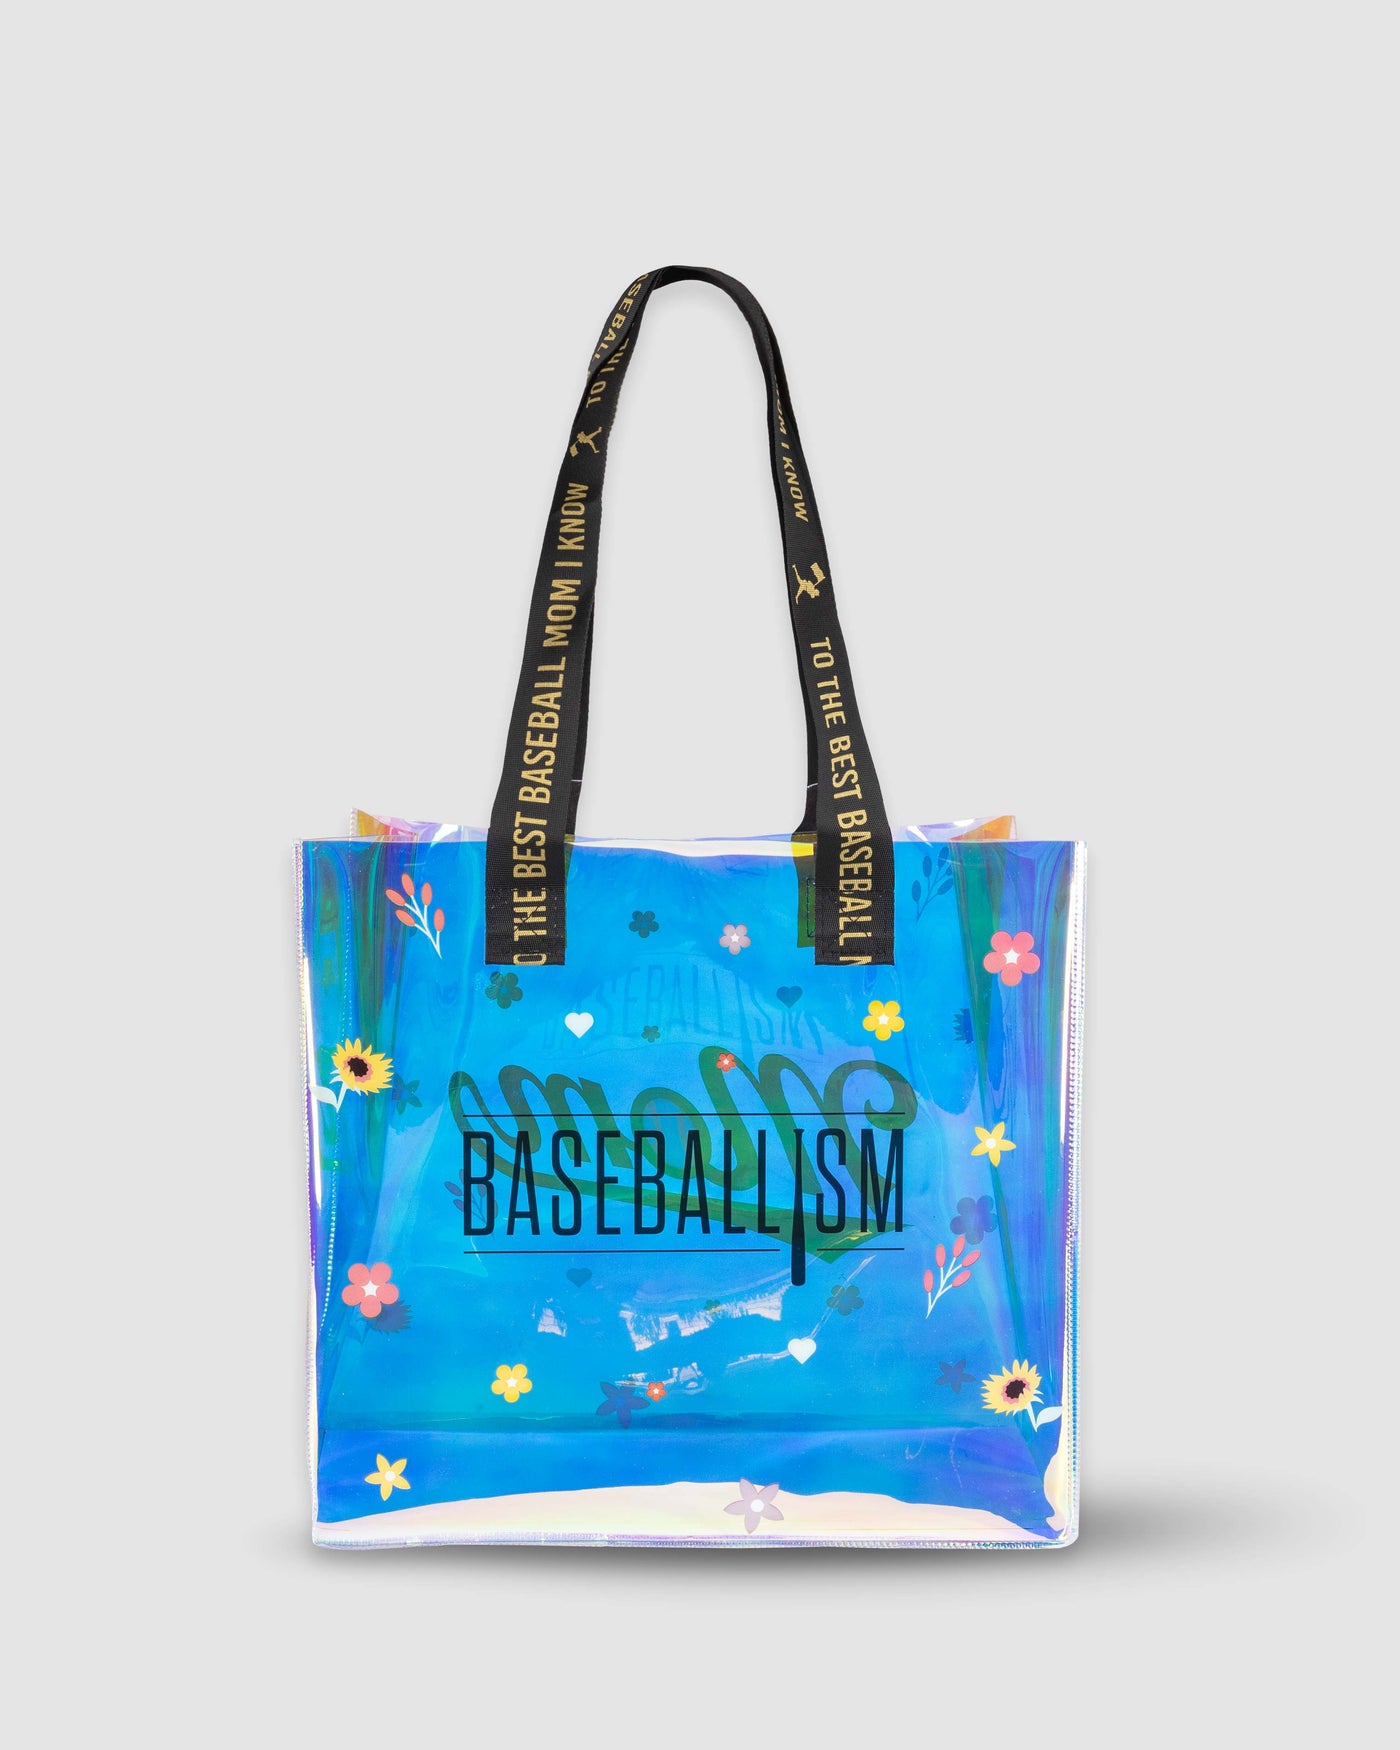 Baseball Mom Stadium Bag (Free with Glove Leather Handbag Purchase)